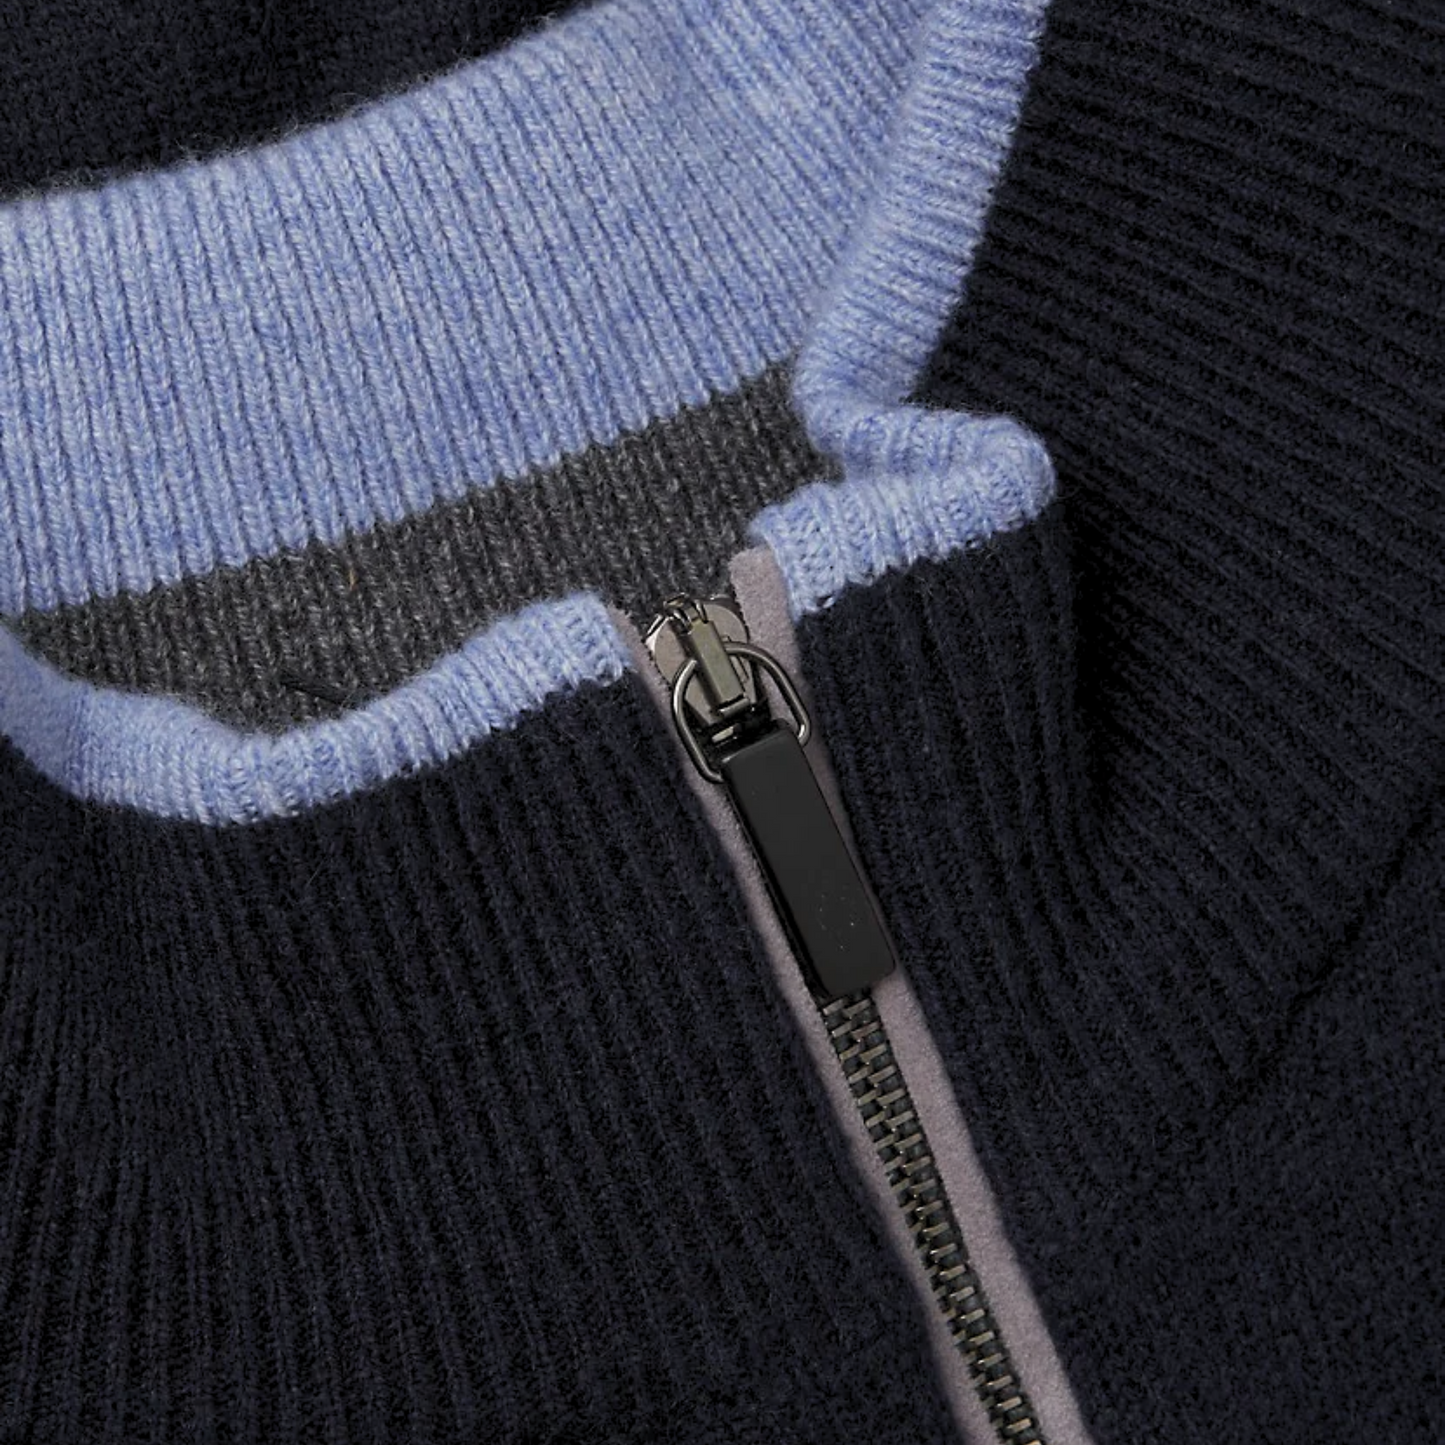 GREYSON x UGP Men's Sebonack Quarter-Zip Sweater